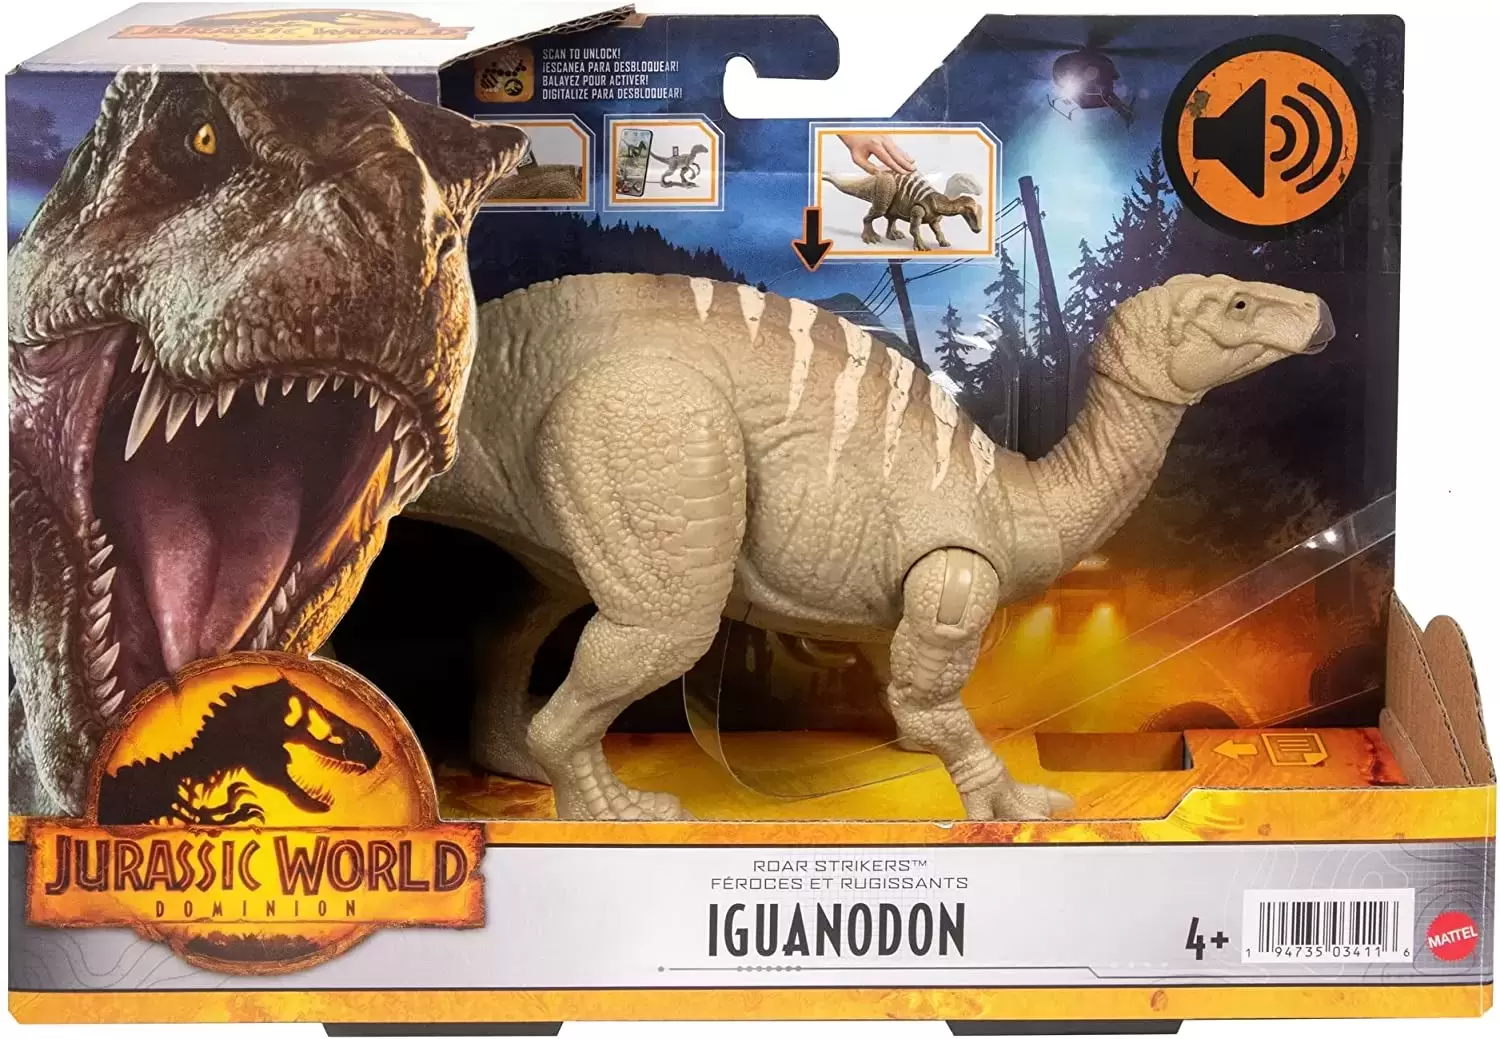 Jurassic World Dominion - Iguanodon - Roar Strikers